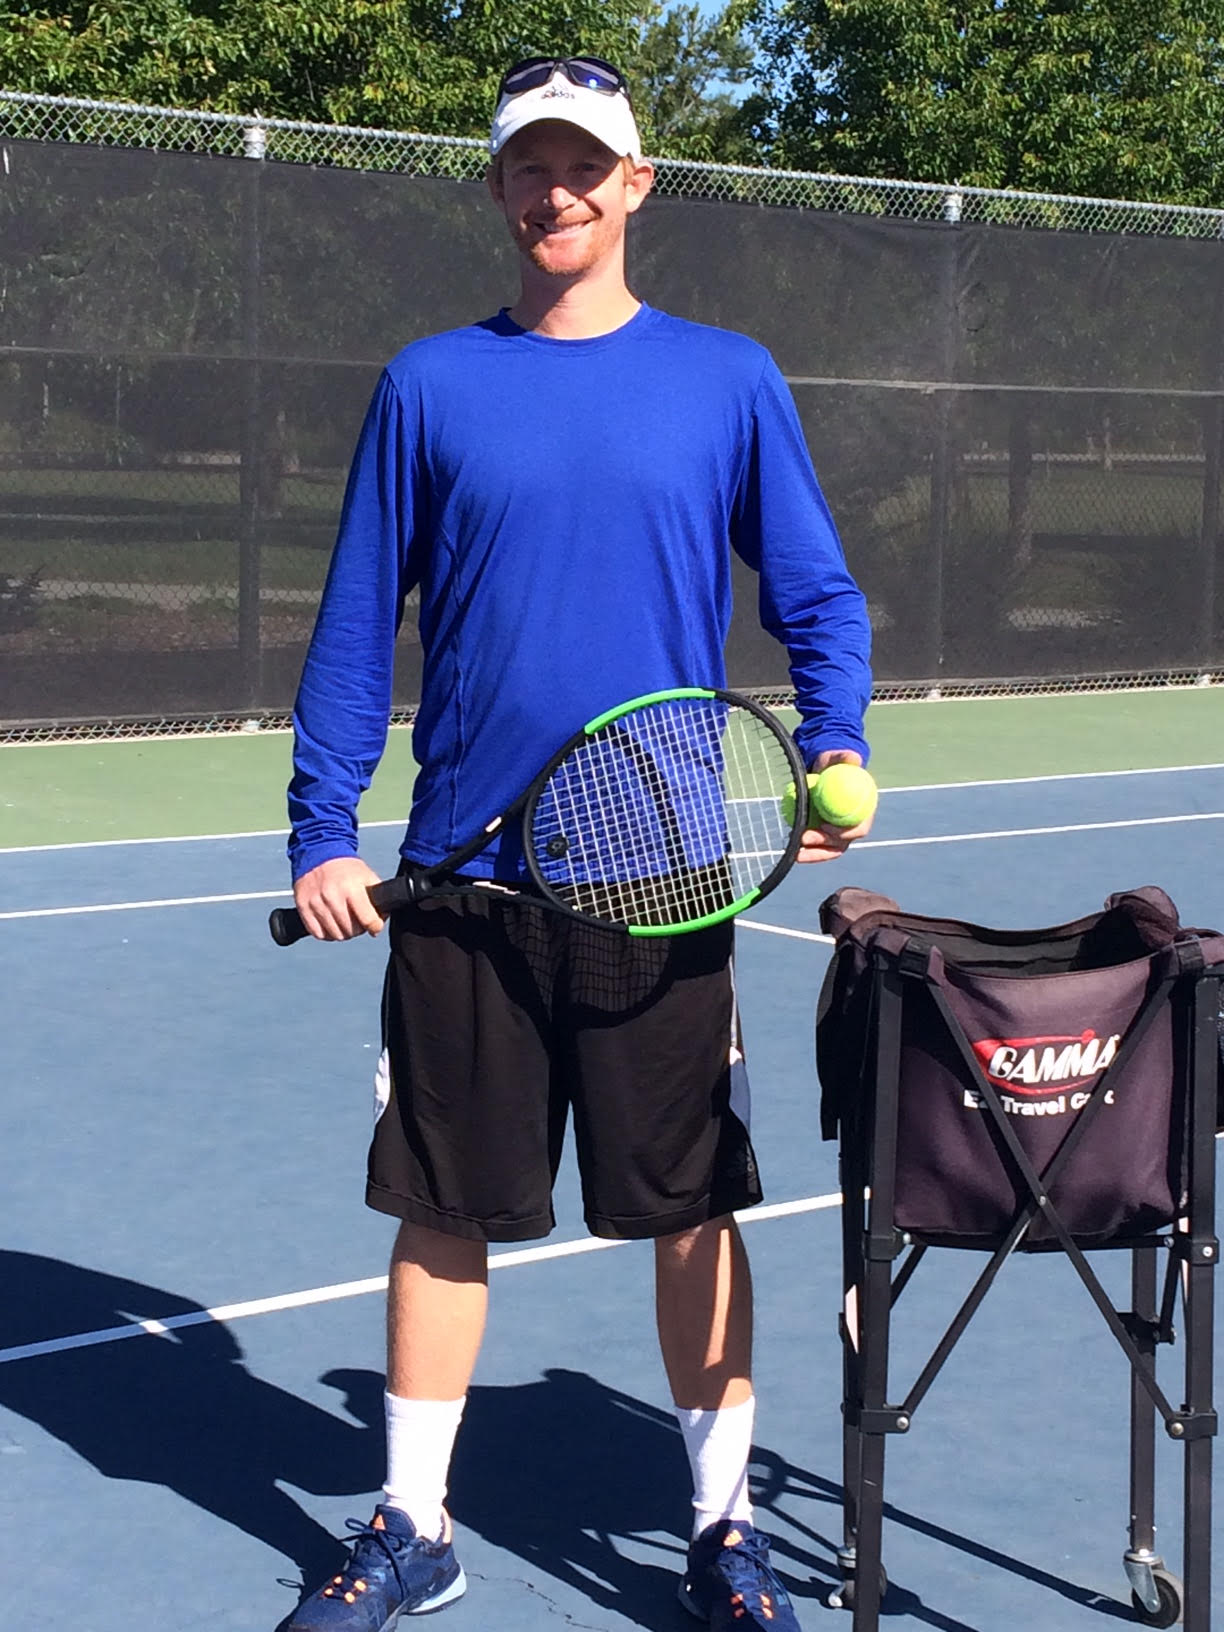 Cole S. teaches tennis lessons in Sacramento, CA